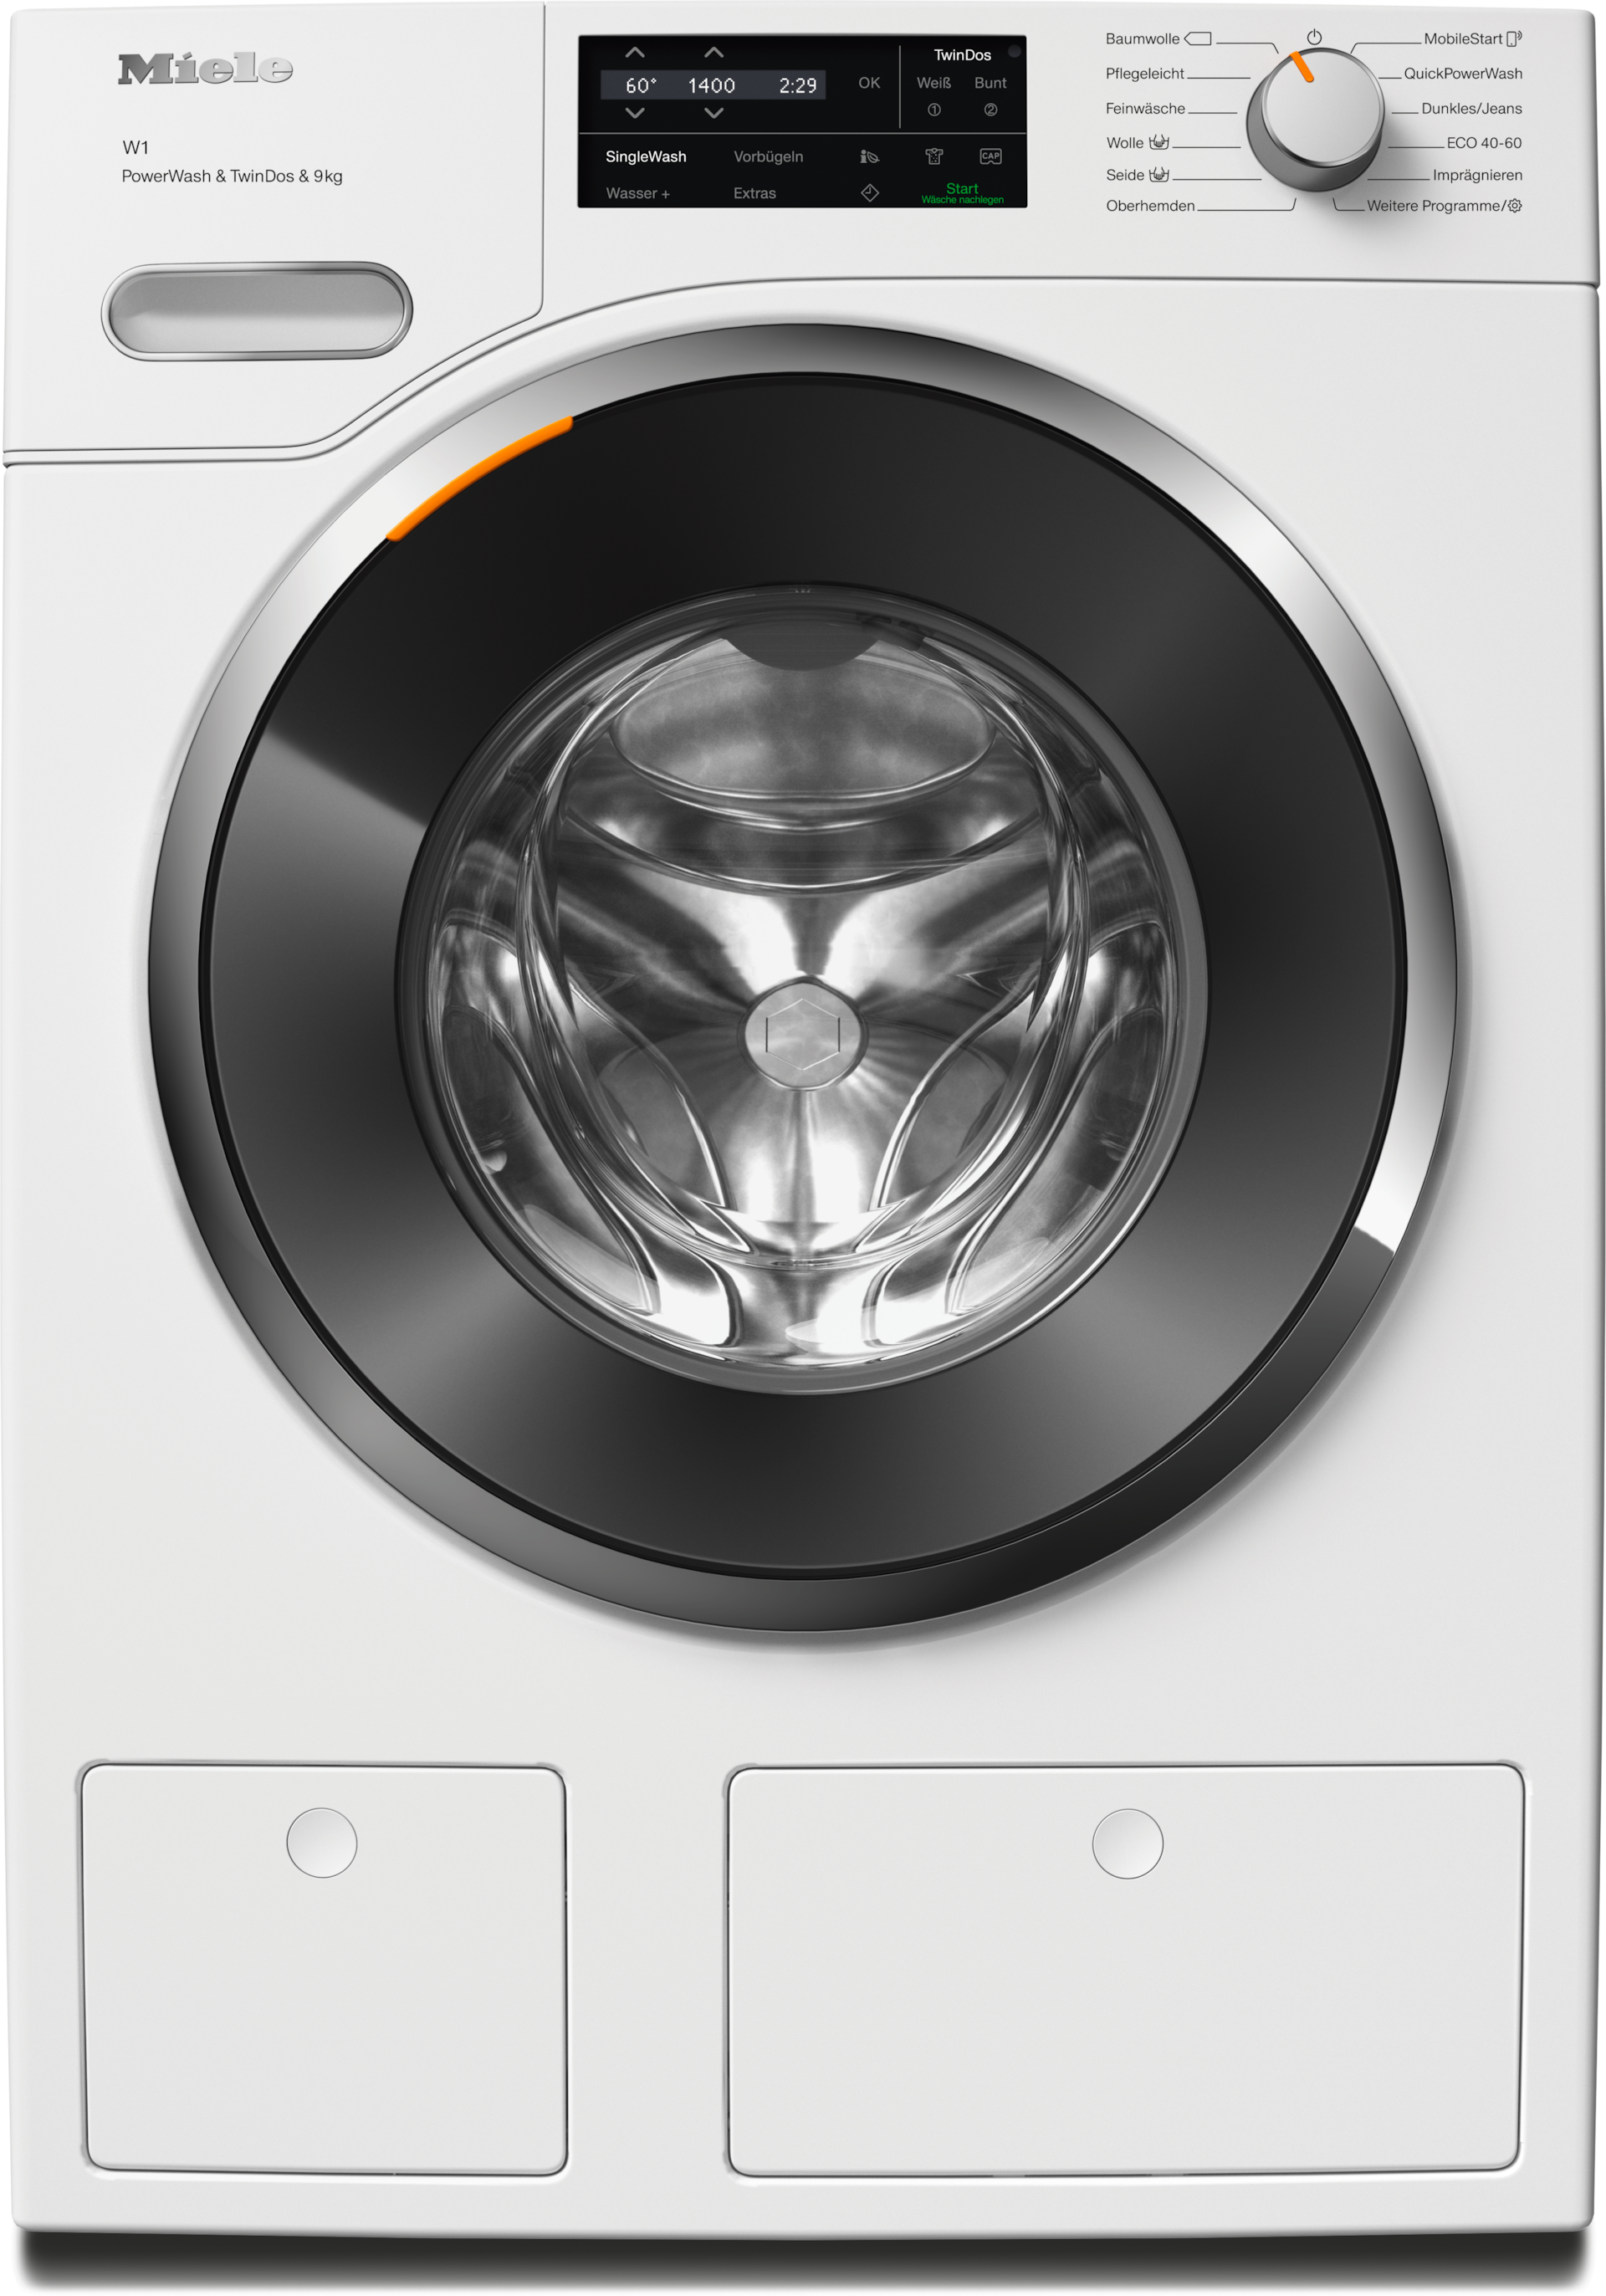 Washing machines - WWI860 WCS PWash&TDos&9kg Lopoč bijela - 1